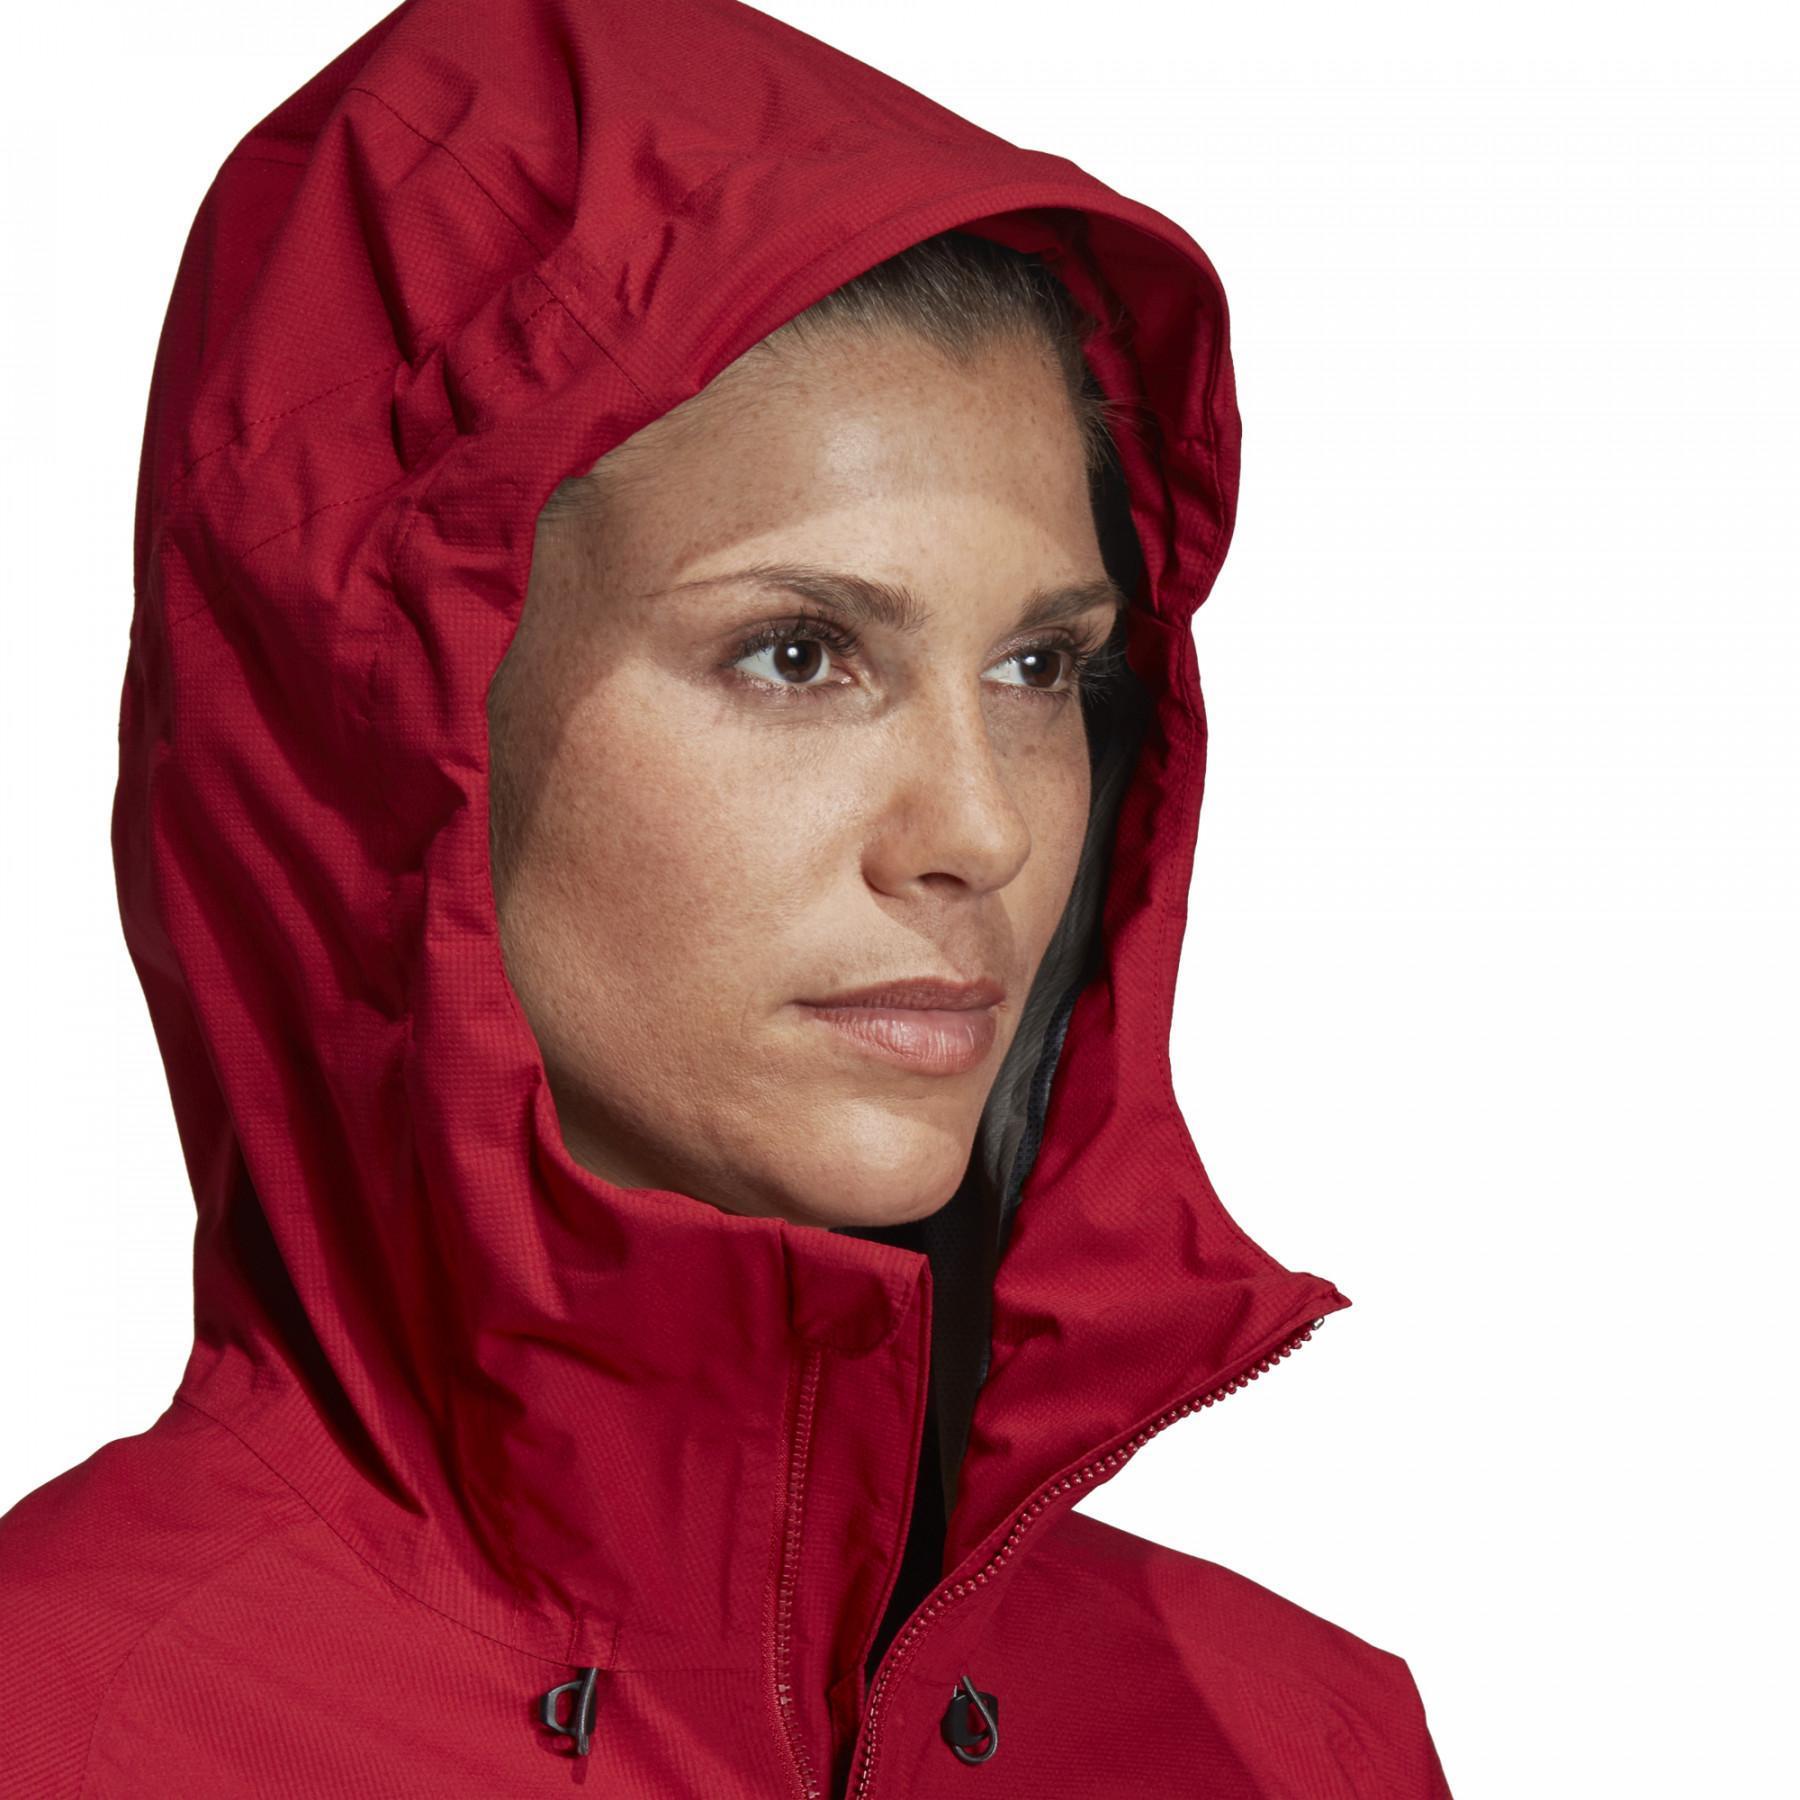 Women's jacket adidas Swift Rain